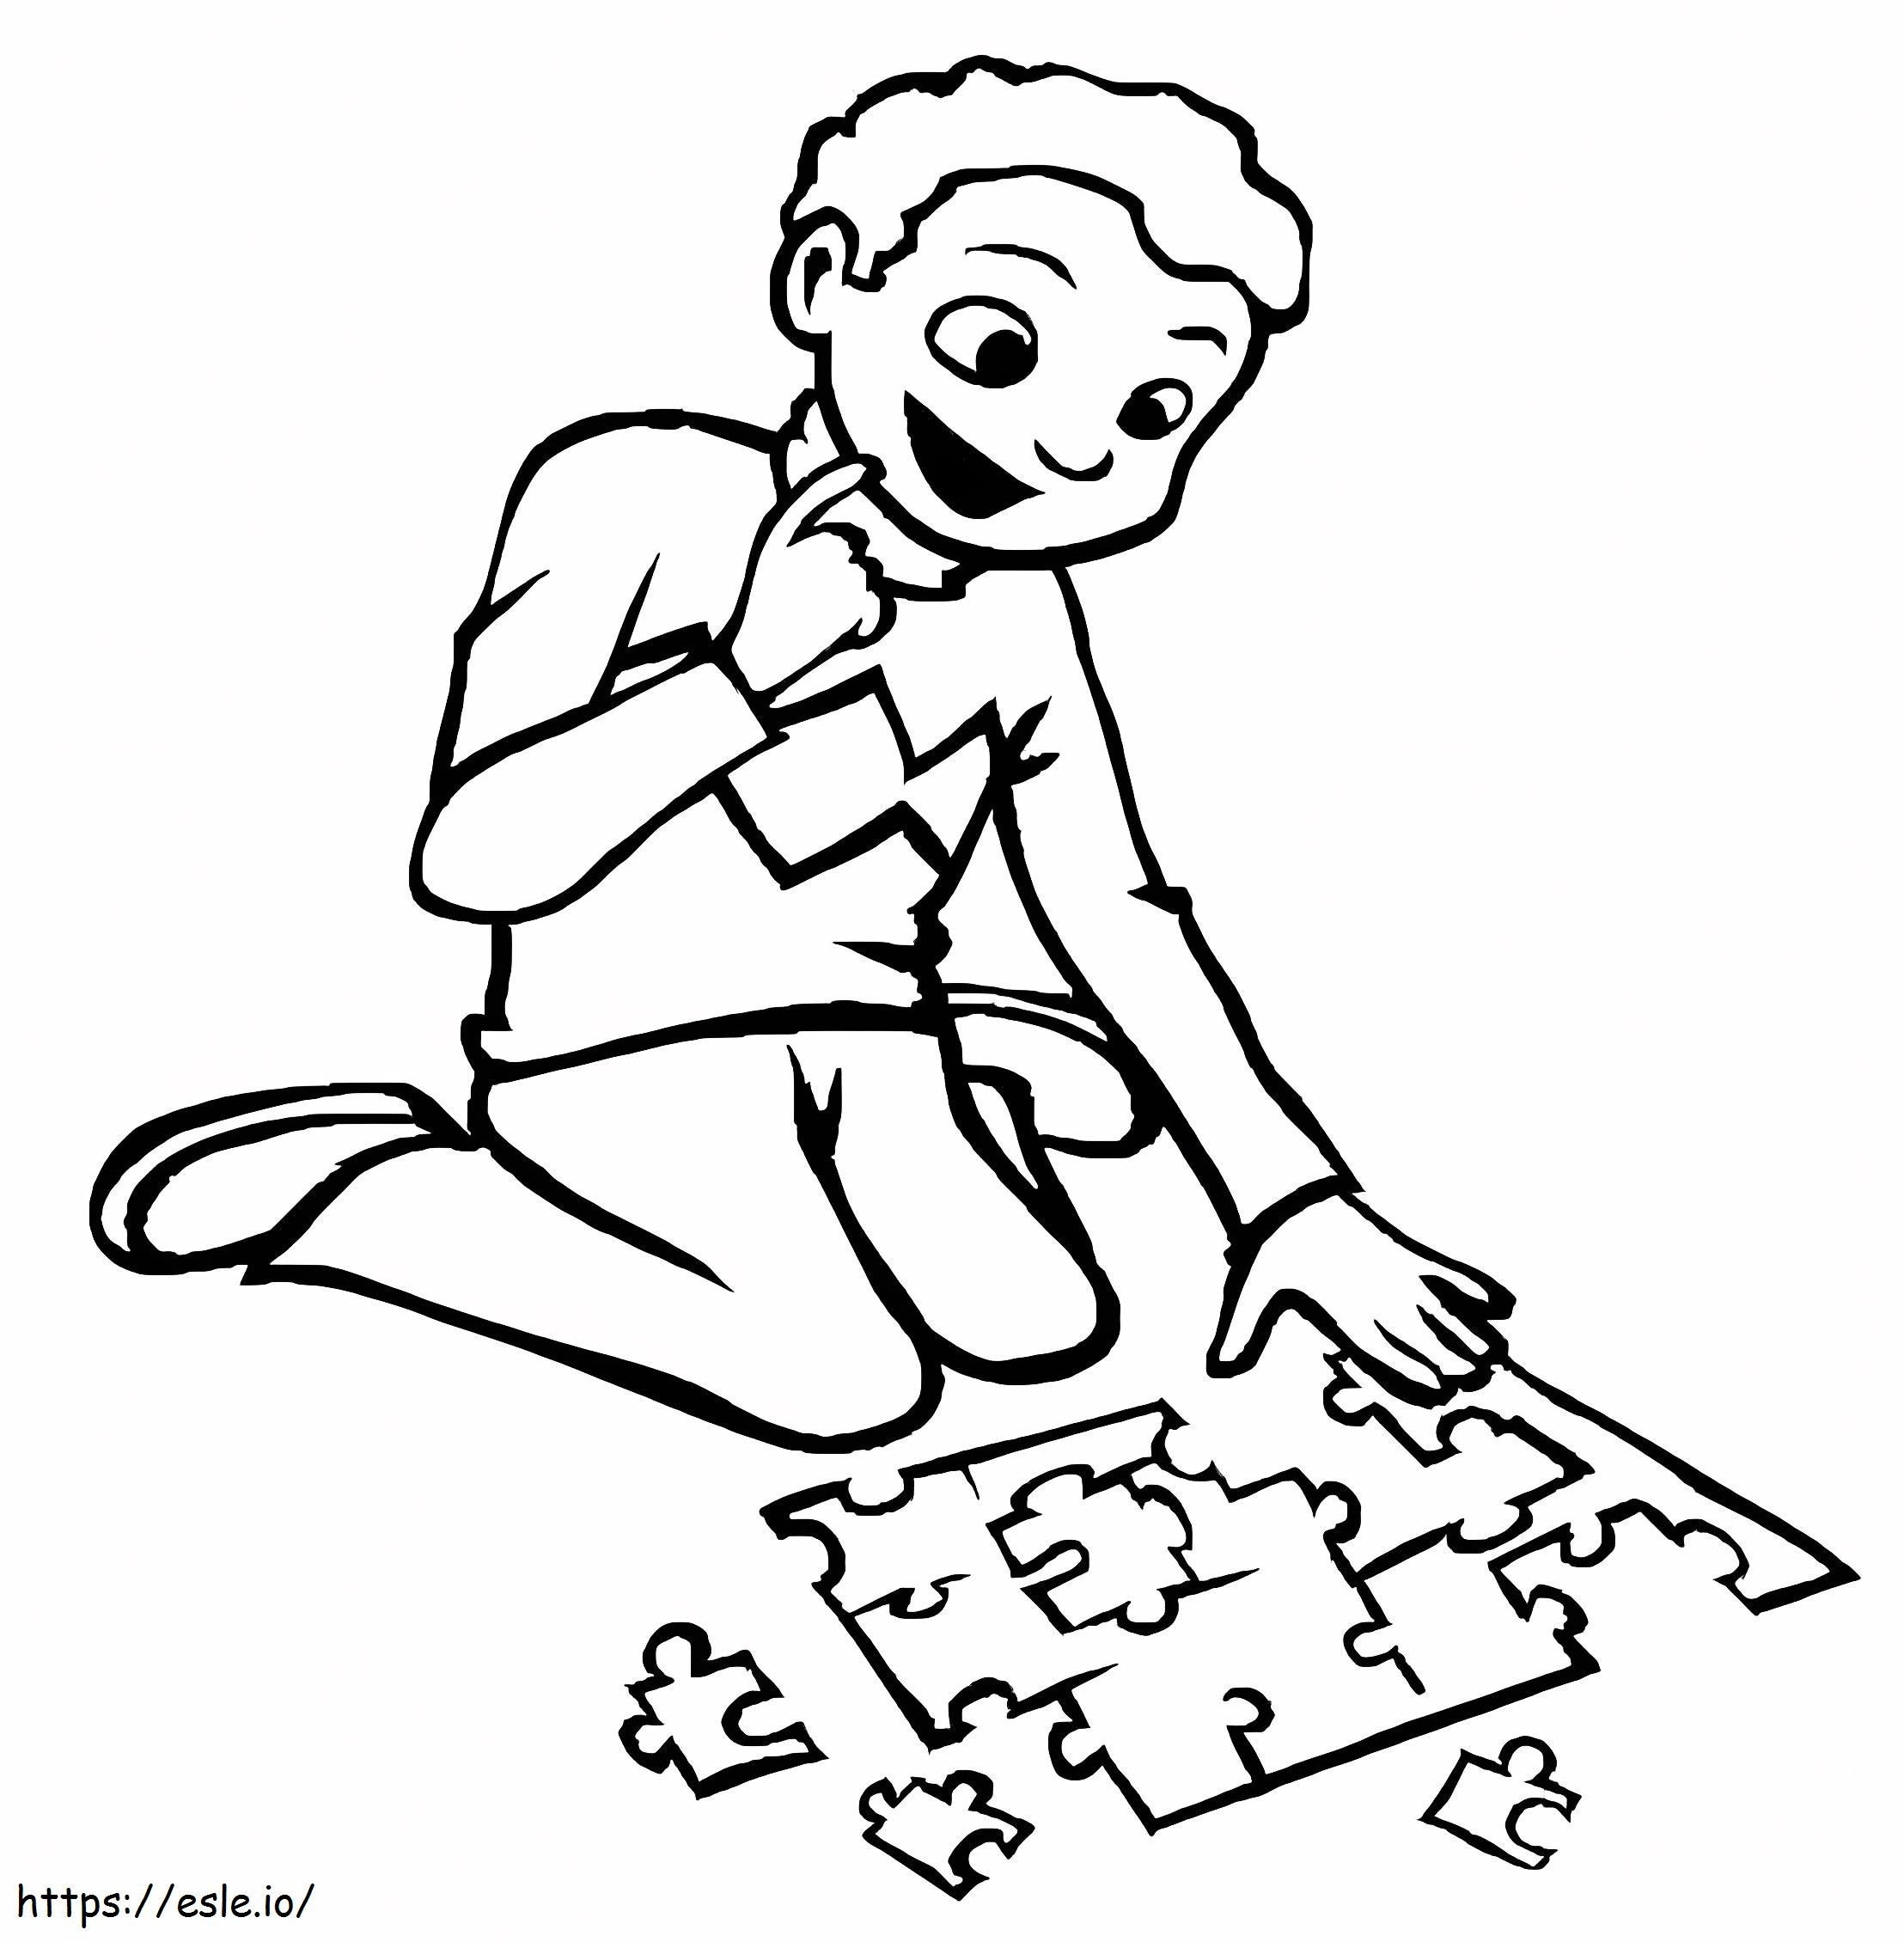 Junge mit Puzzles ausmalbilder